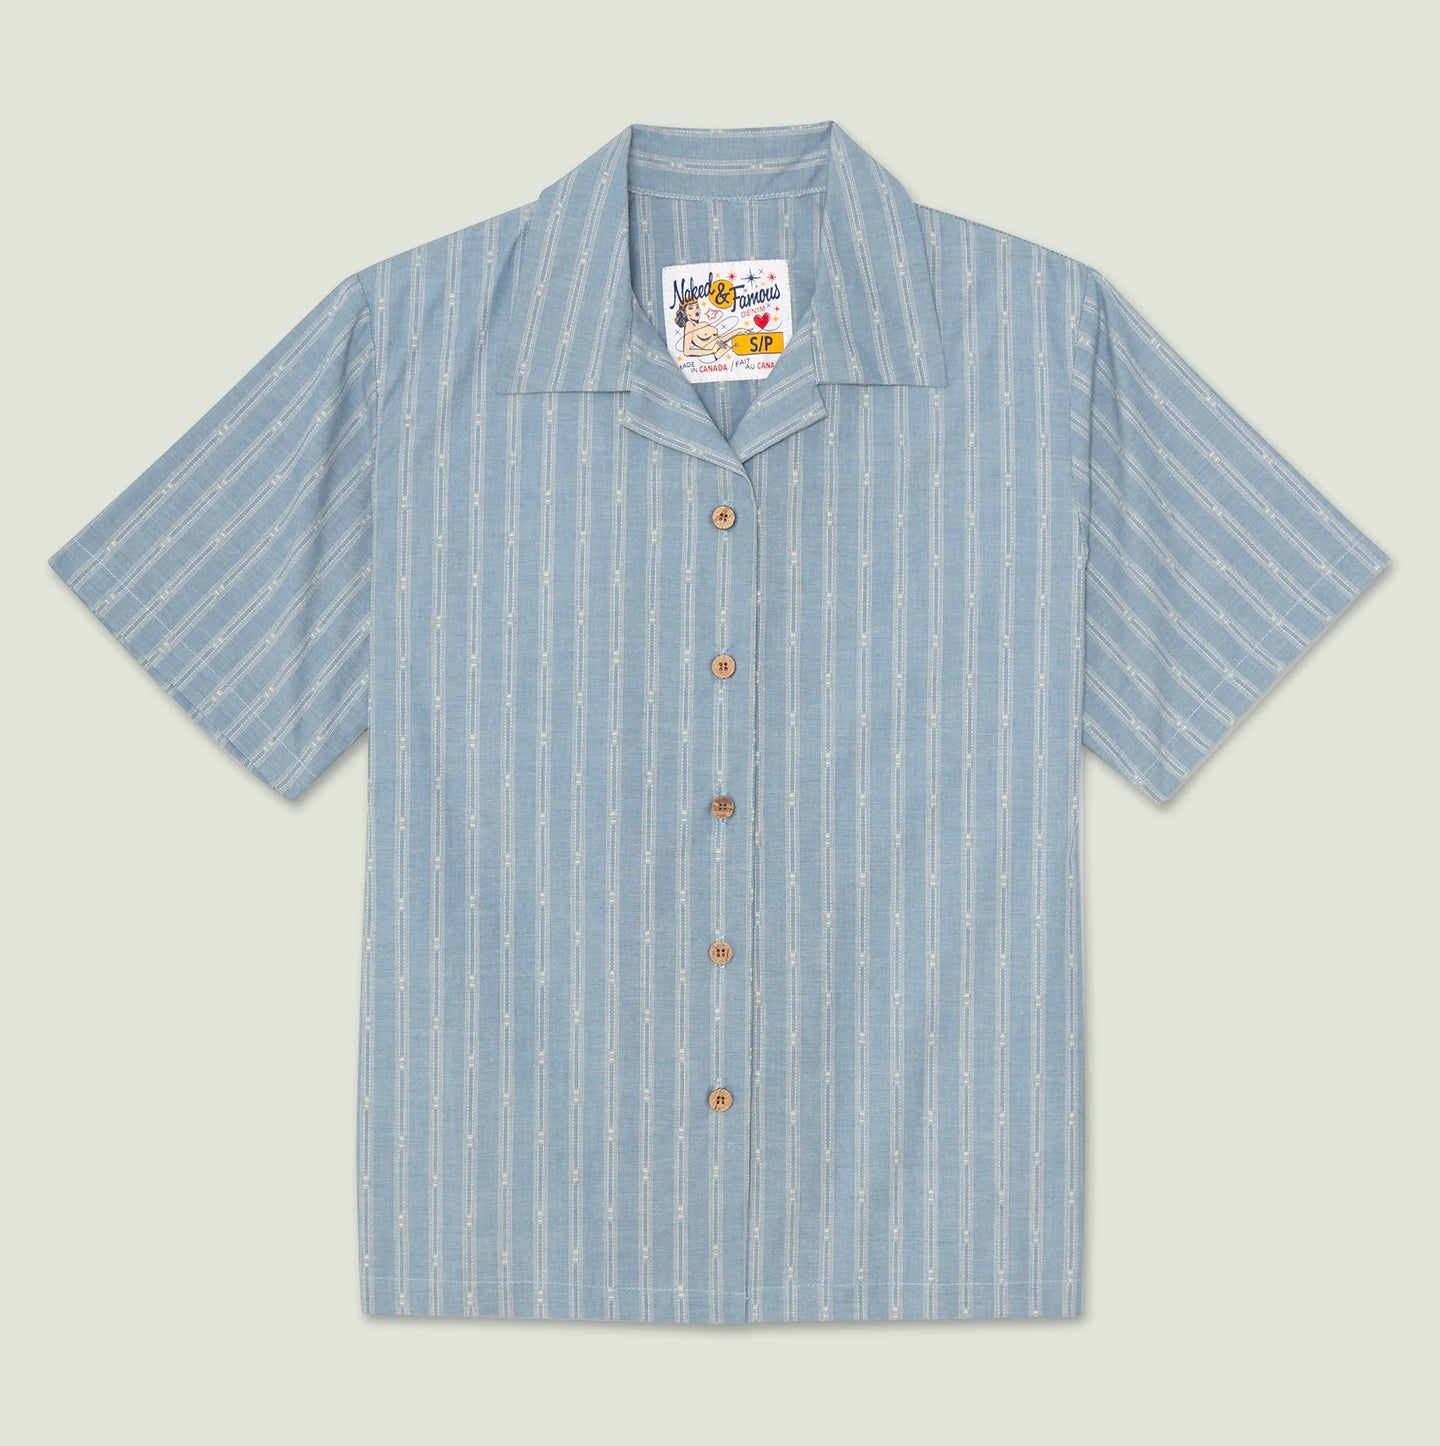 Women's Camp Collar Shirt - Vintage Dobby Stripes - Pale Blue